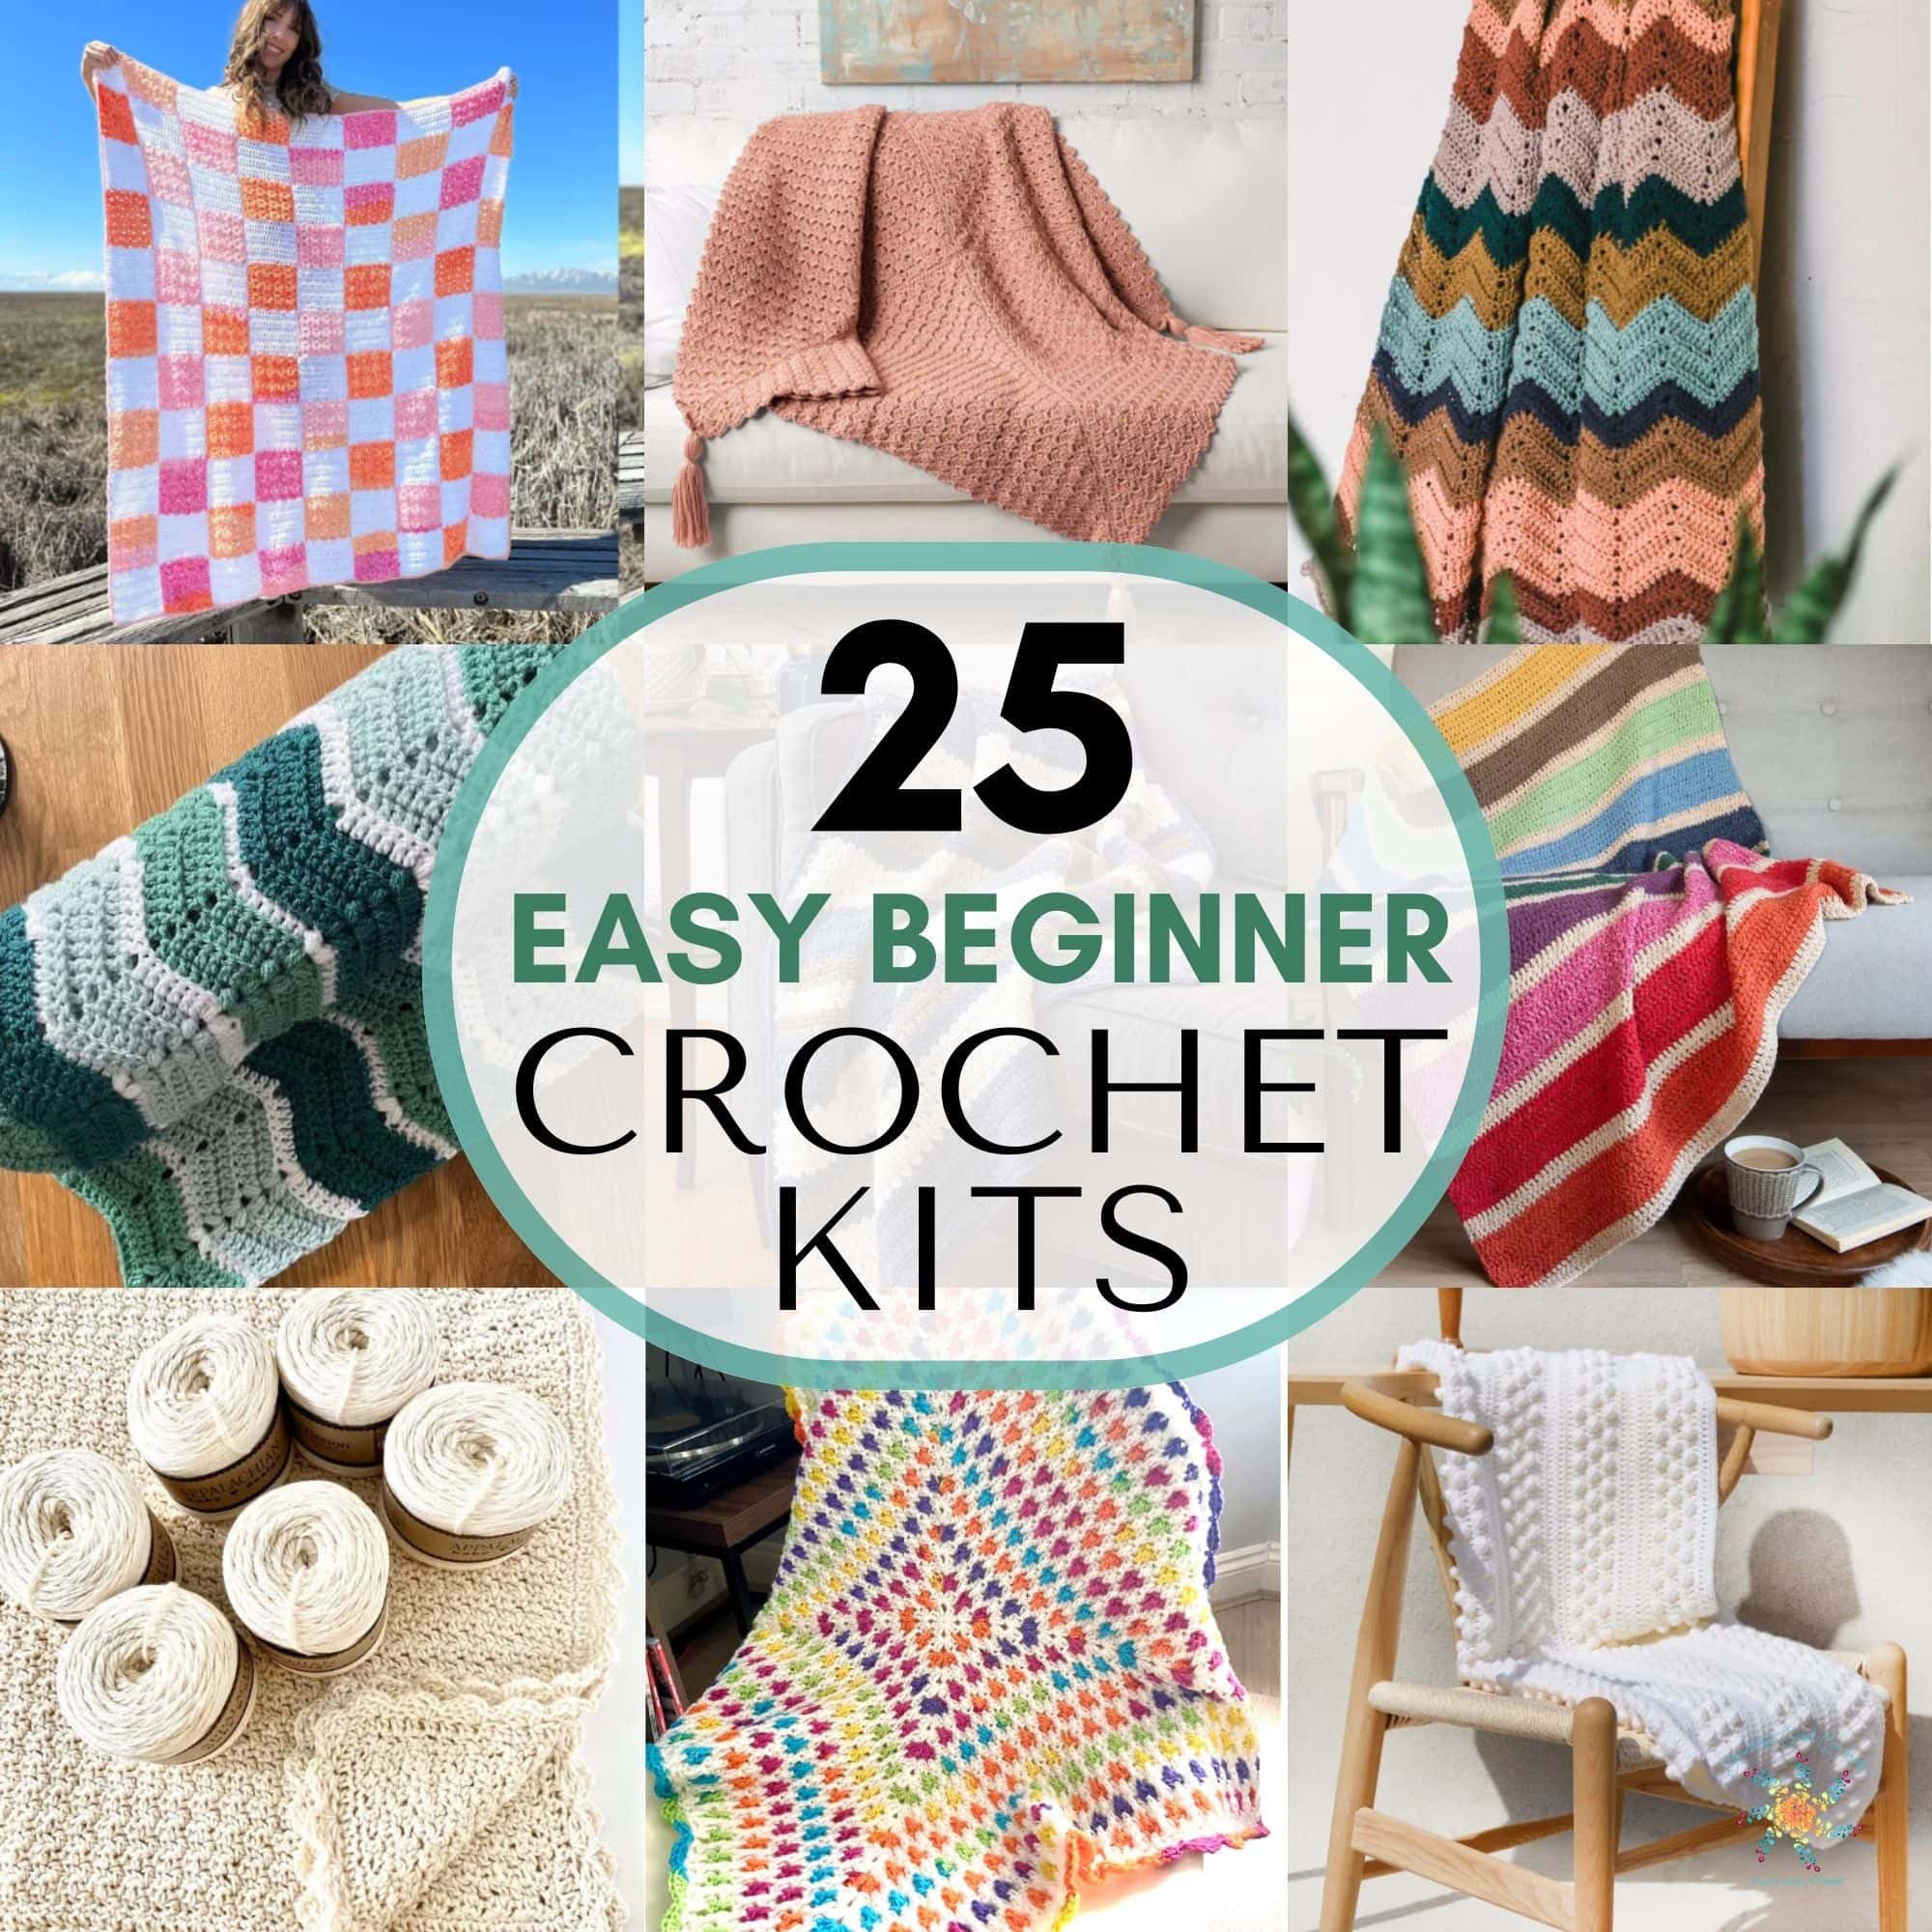 25 crochet blanket kits for beginners featured